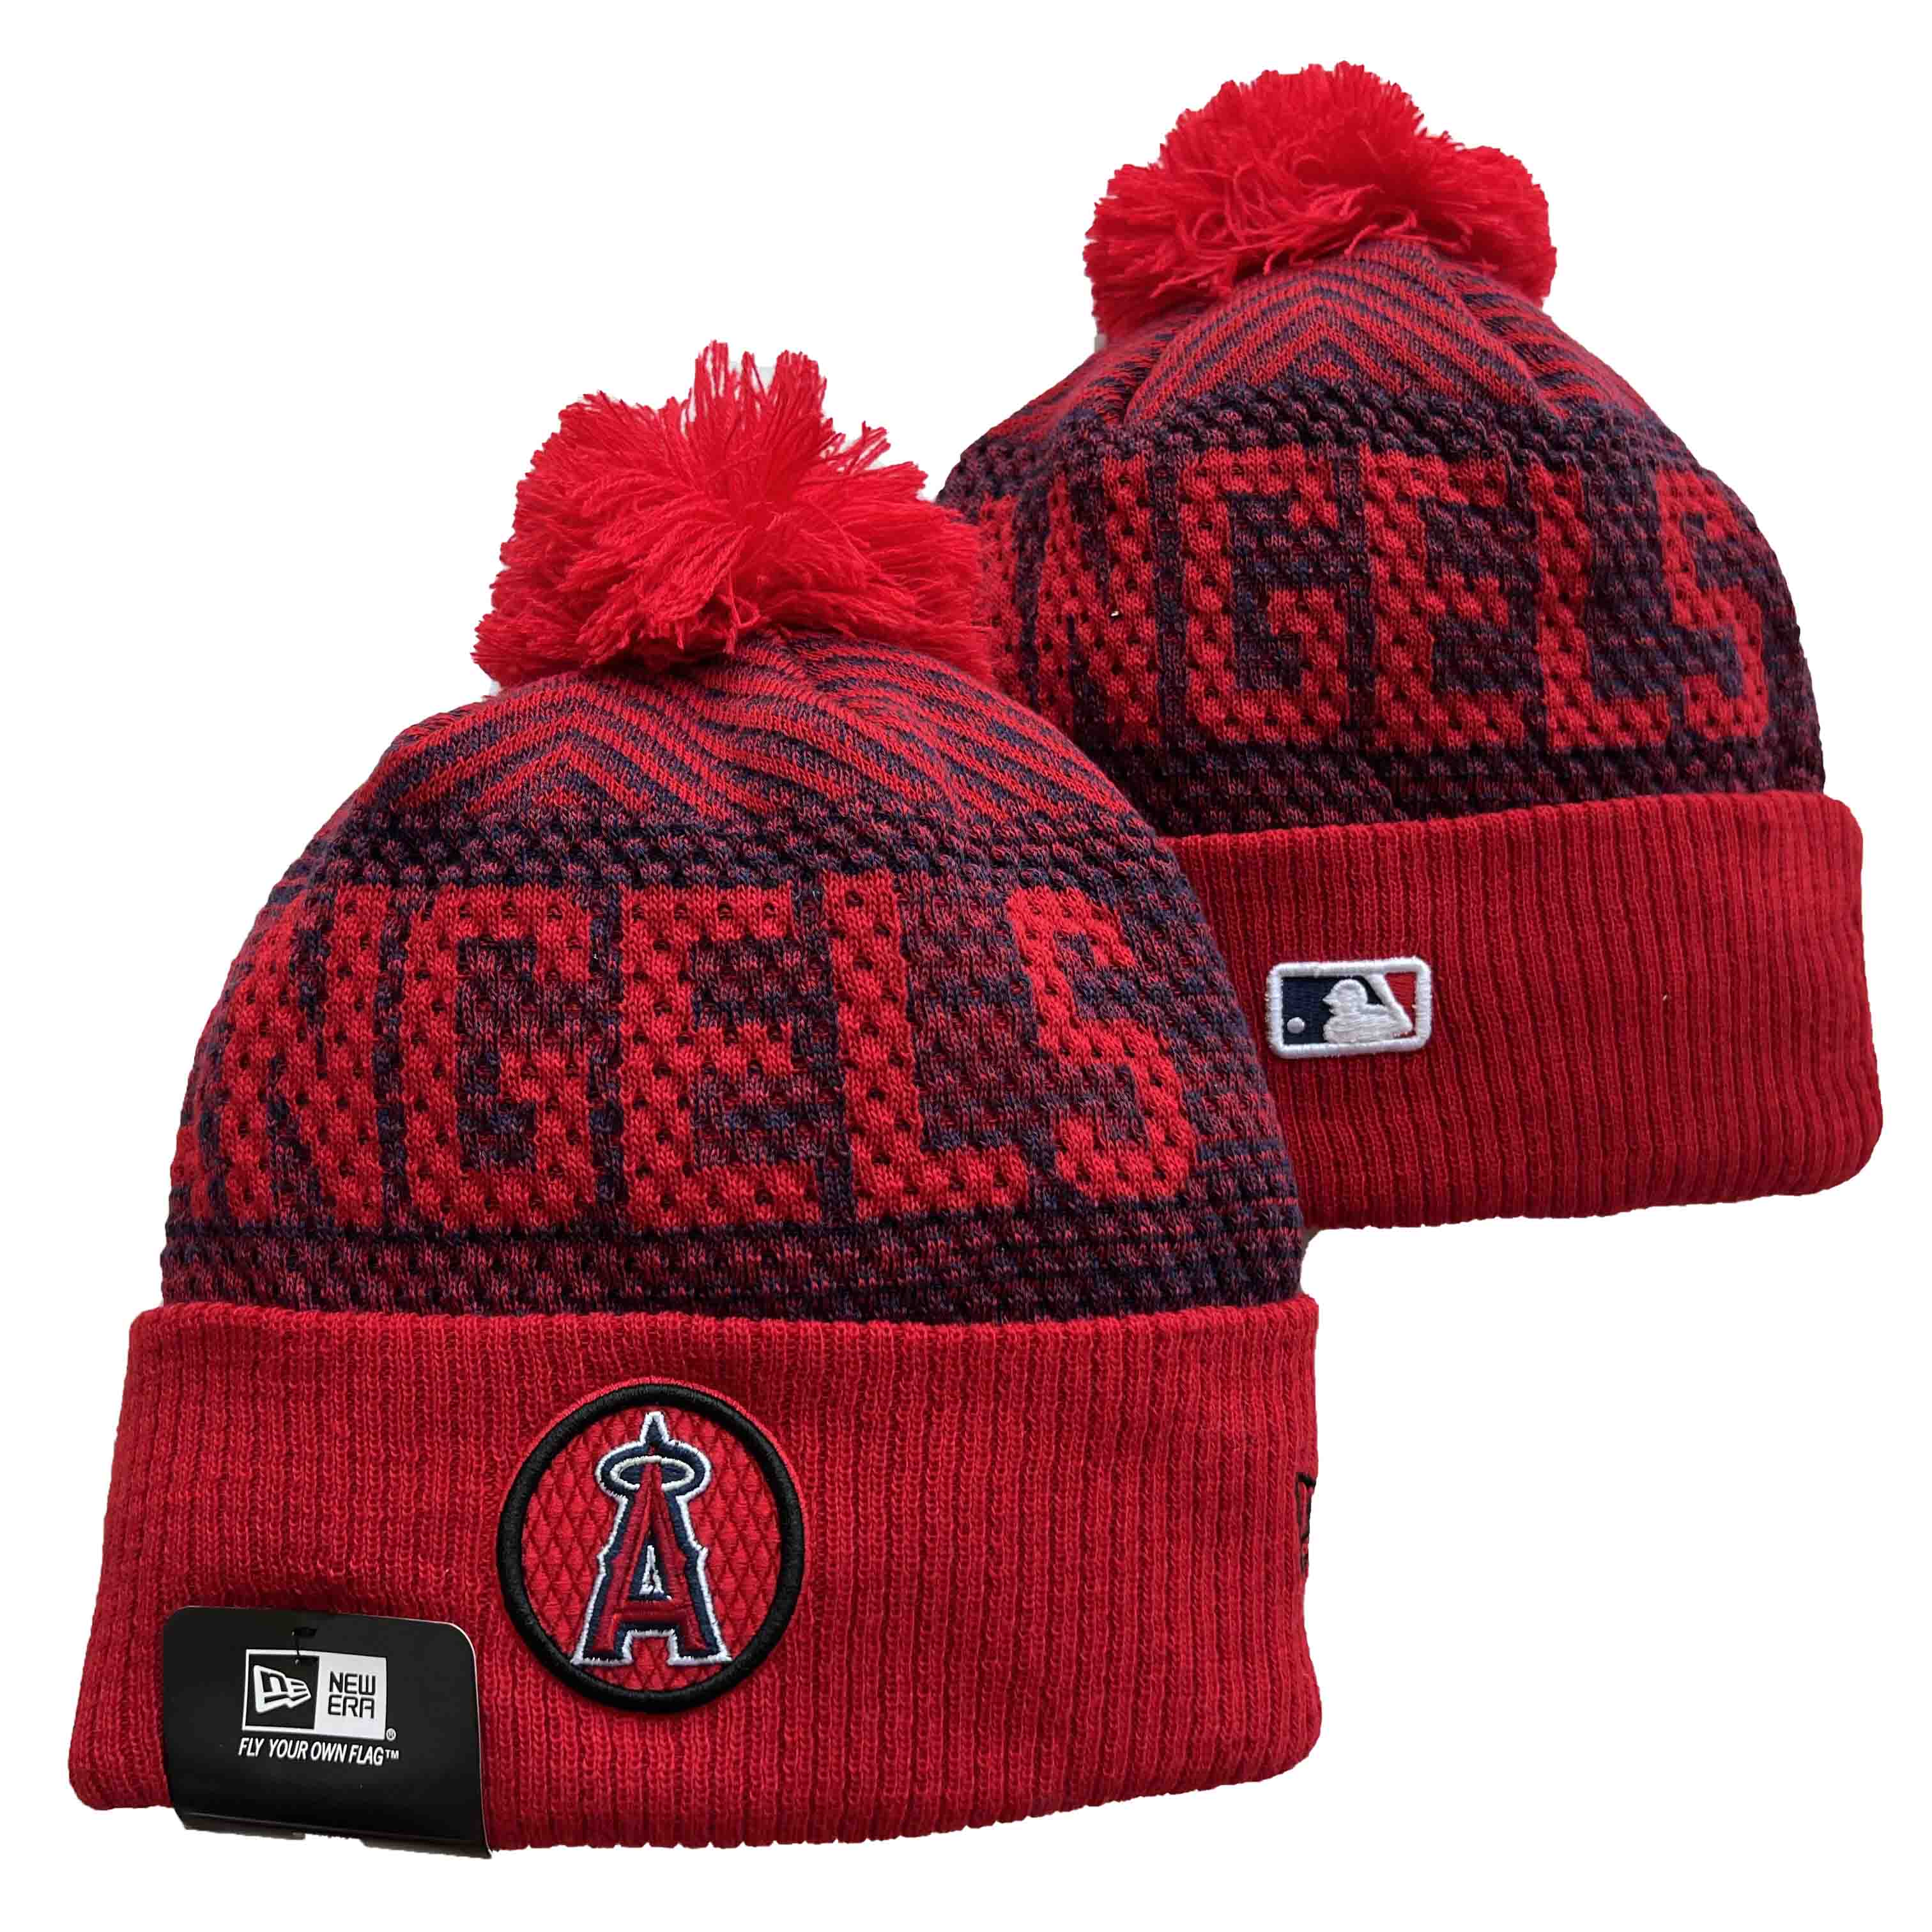 MLB LA Angels of Anaheim Beanies Knit Hats-YD134